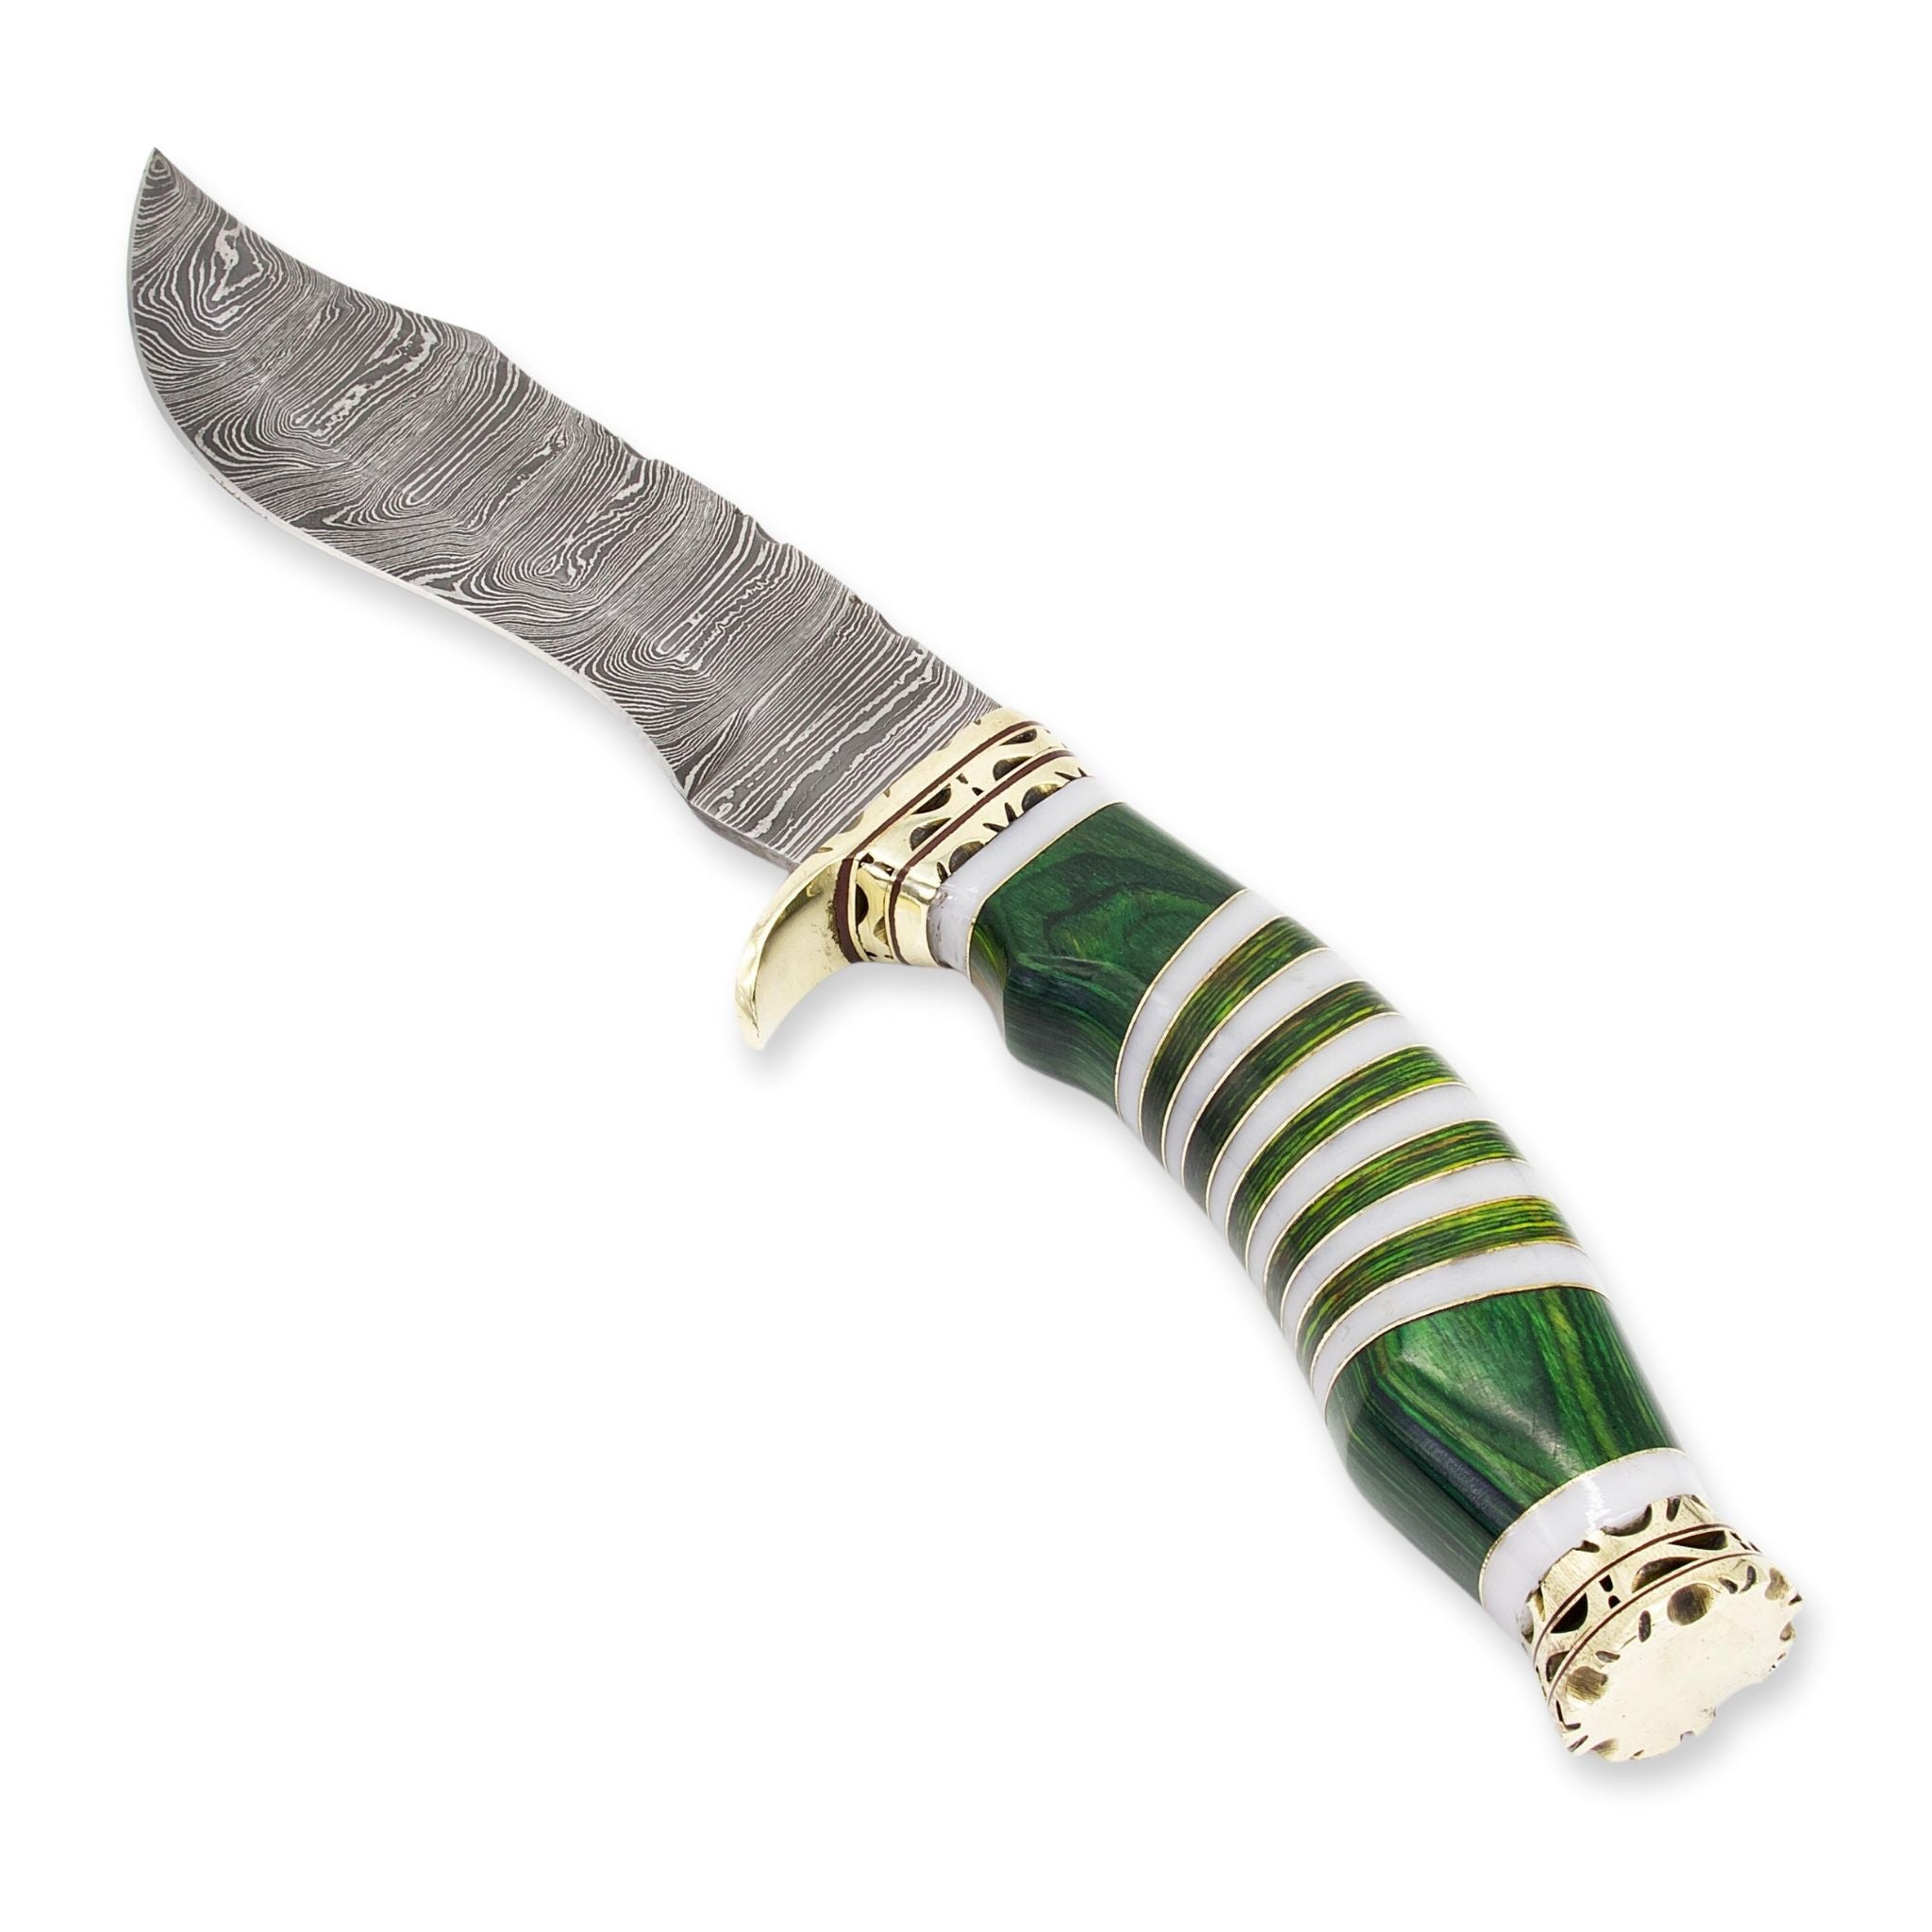 Maven Maxim I, Damascus Steel, Handmade Hunting Knife